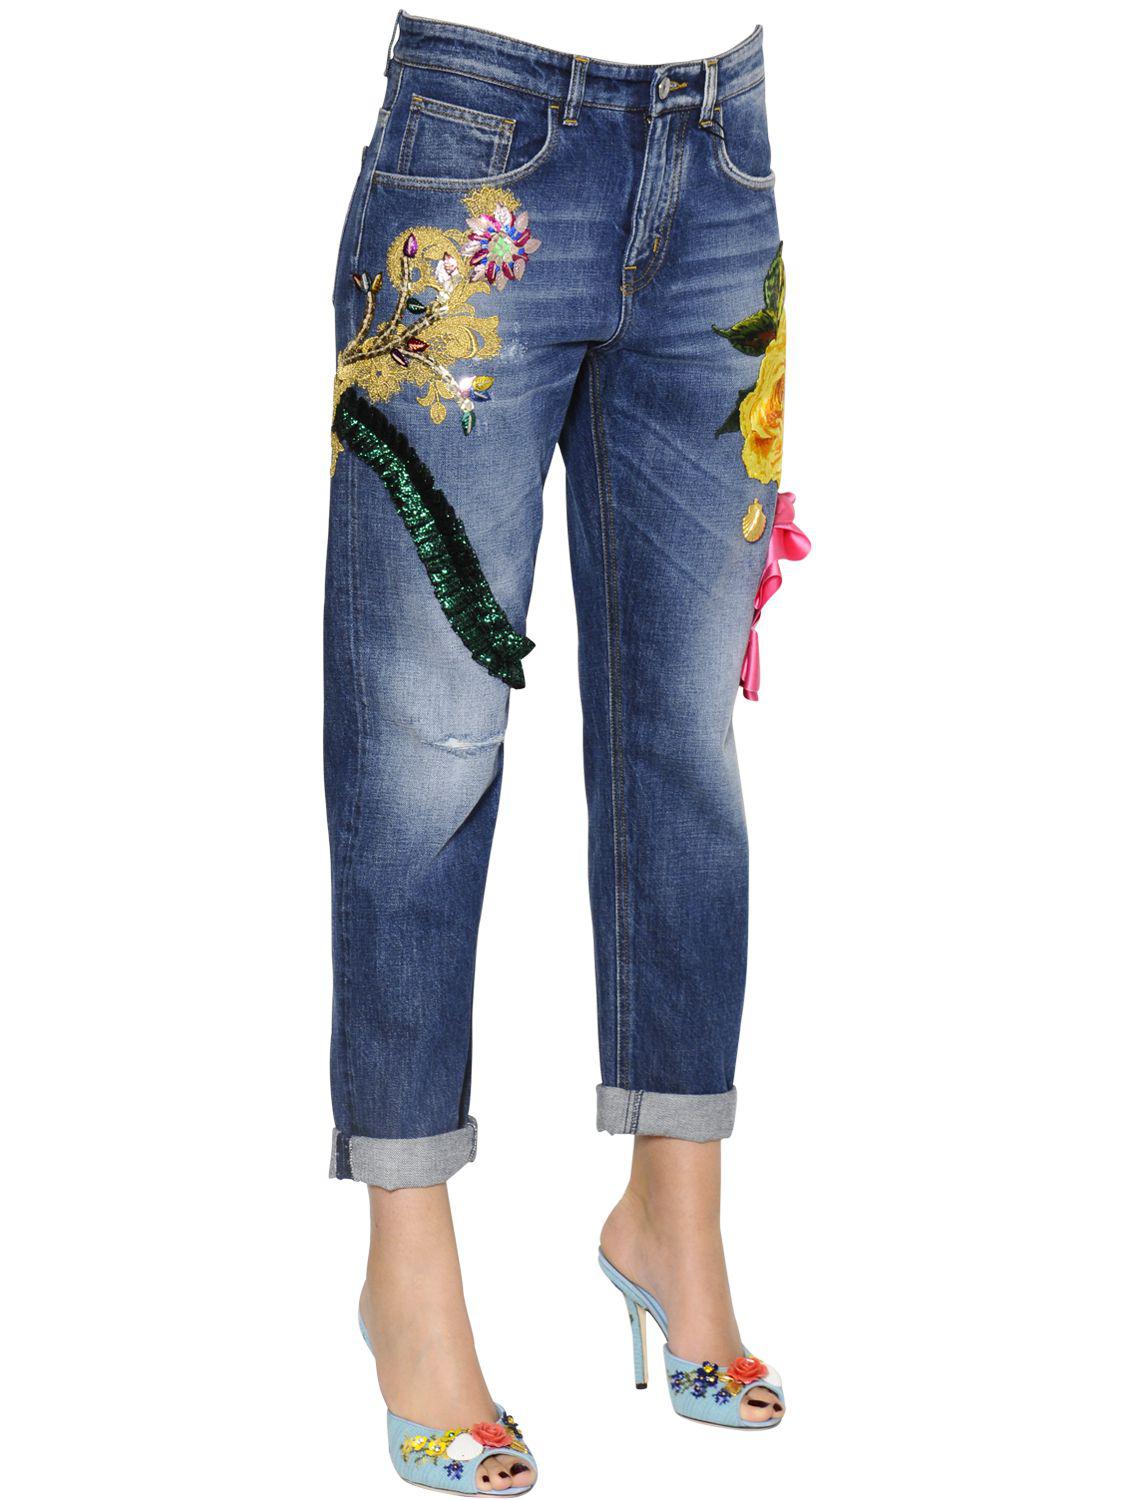 Lyst - Dolce & Gabbana Embroidered Cotton Denim Jeans in Blue